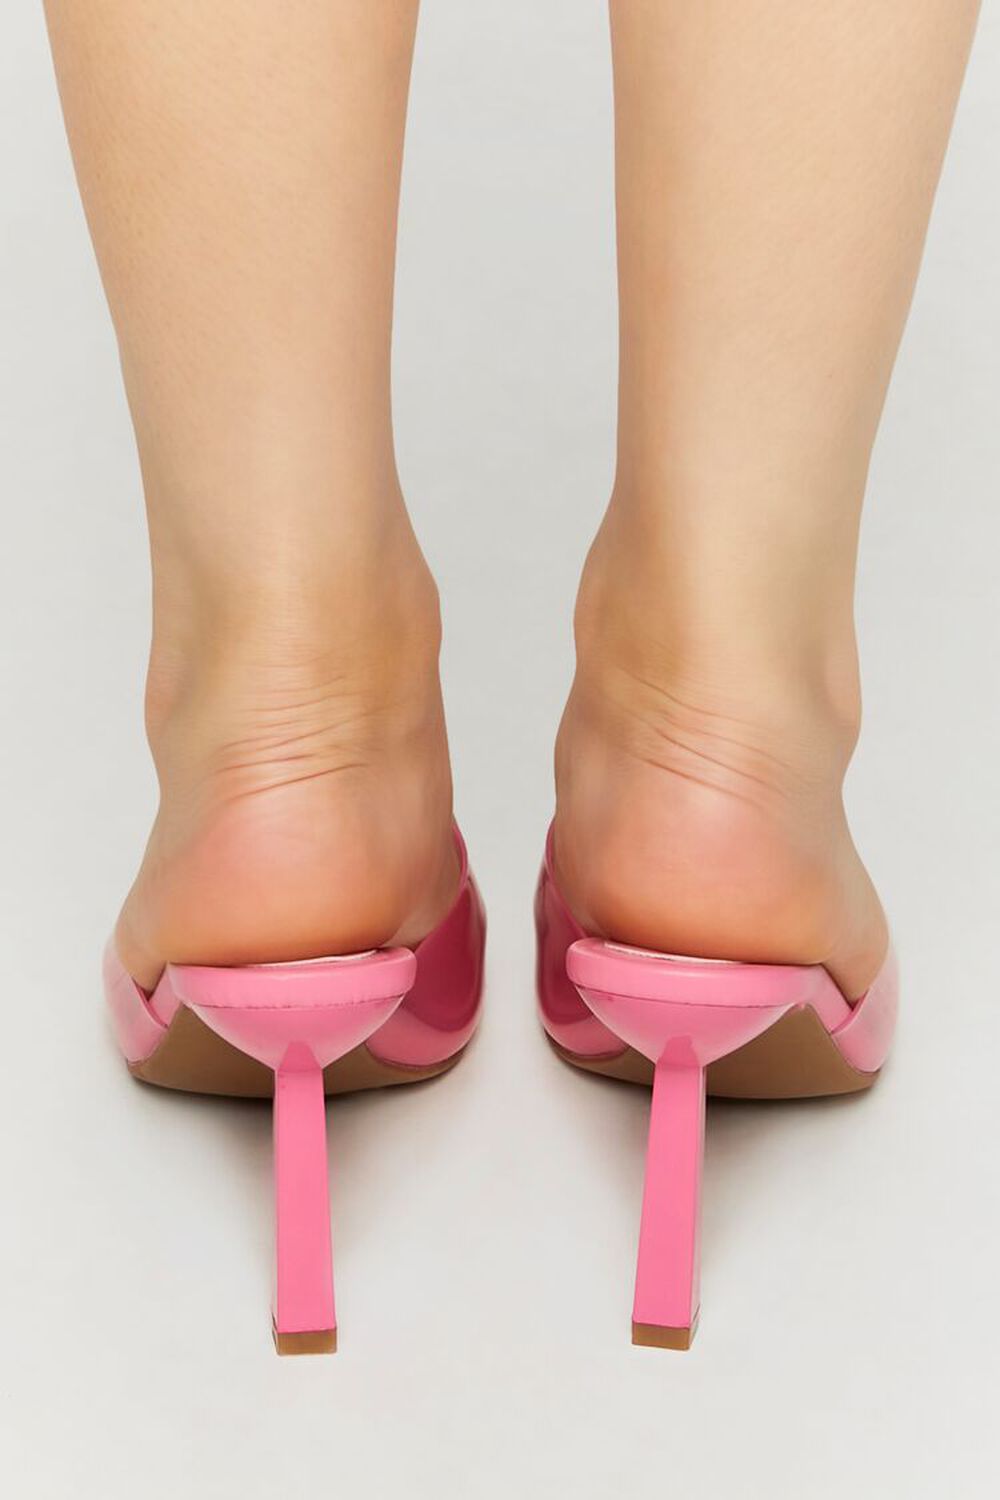 PINK Transparent Open-Toe Stiletto Heels, image 3